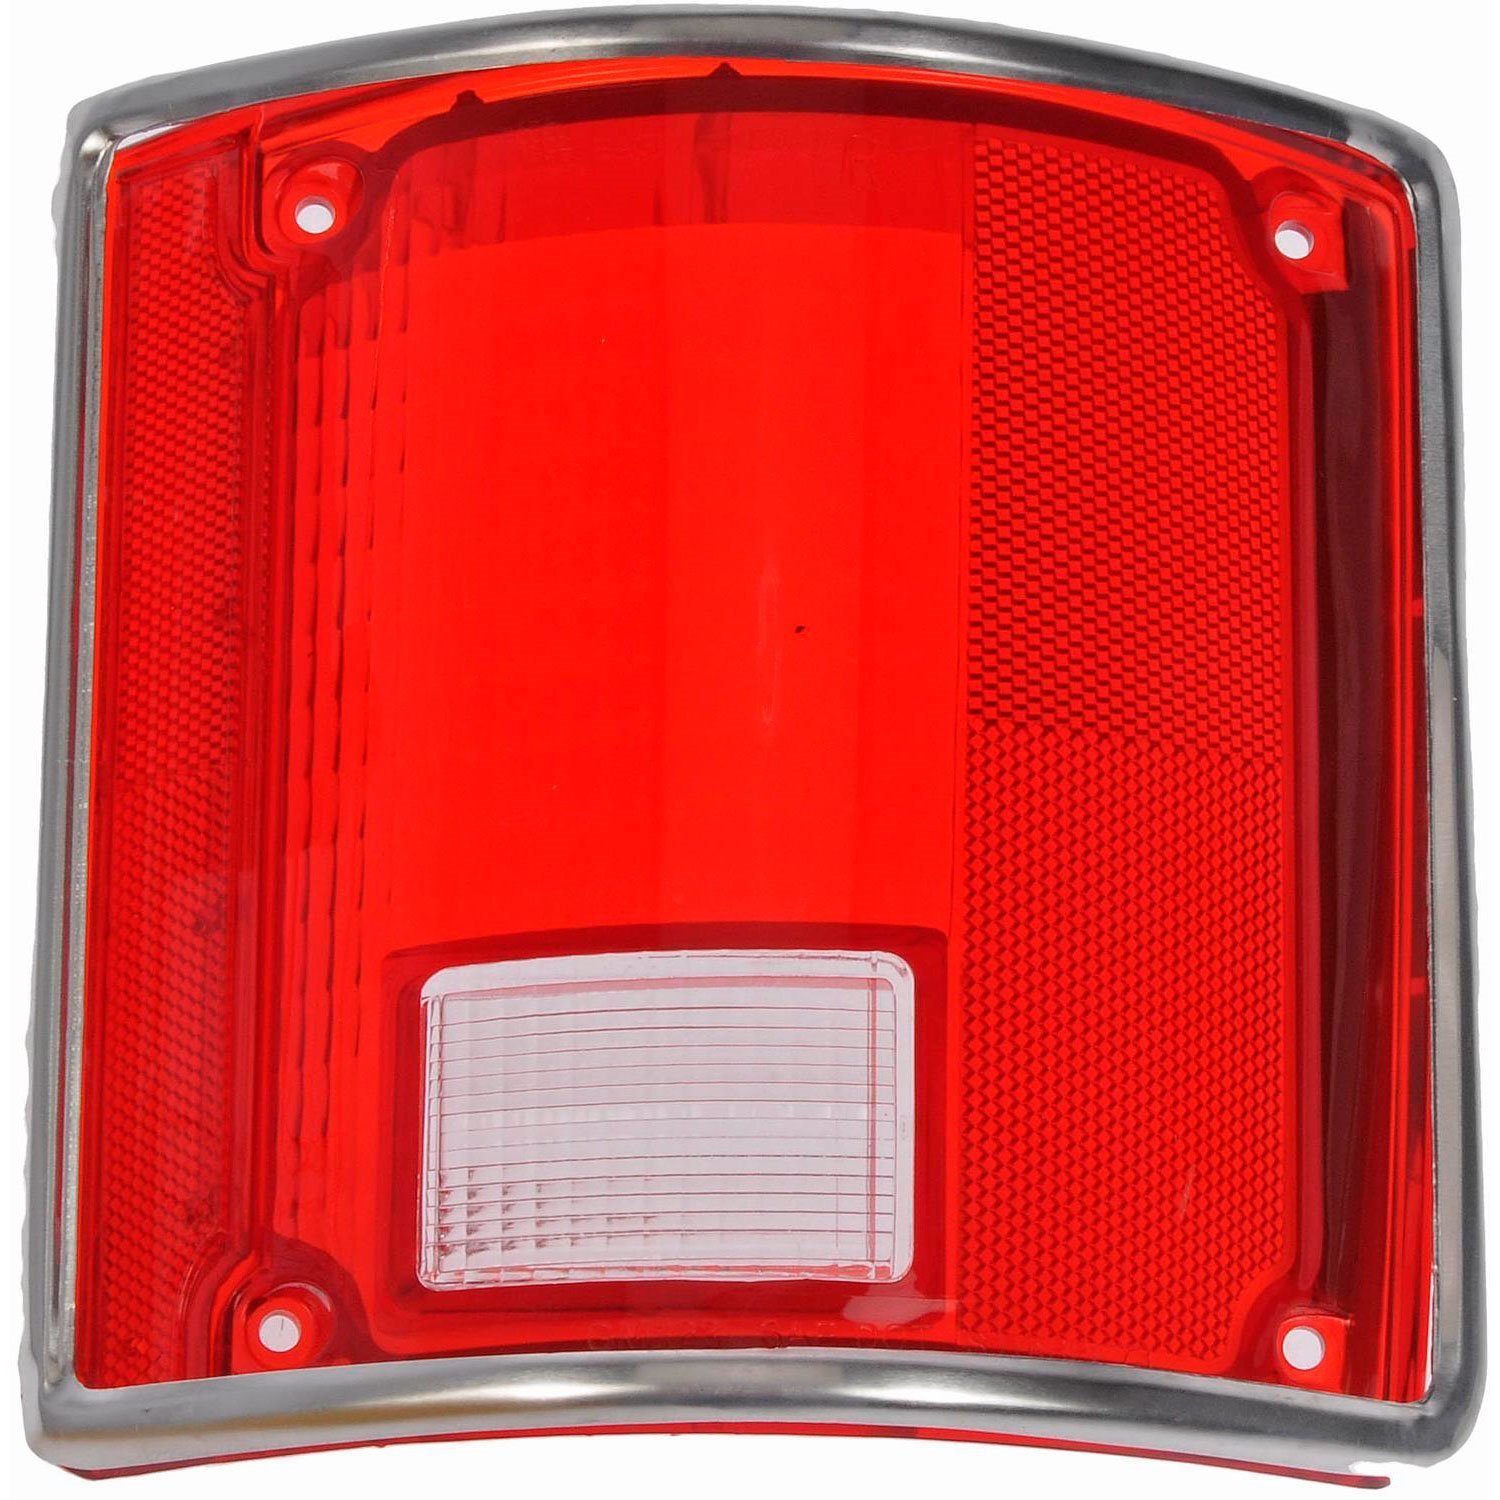 1610089 Tail Lamp Lens Fits Select 1973-1991 Chevrolet/GMC Models [Right/Passenger Side]